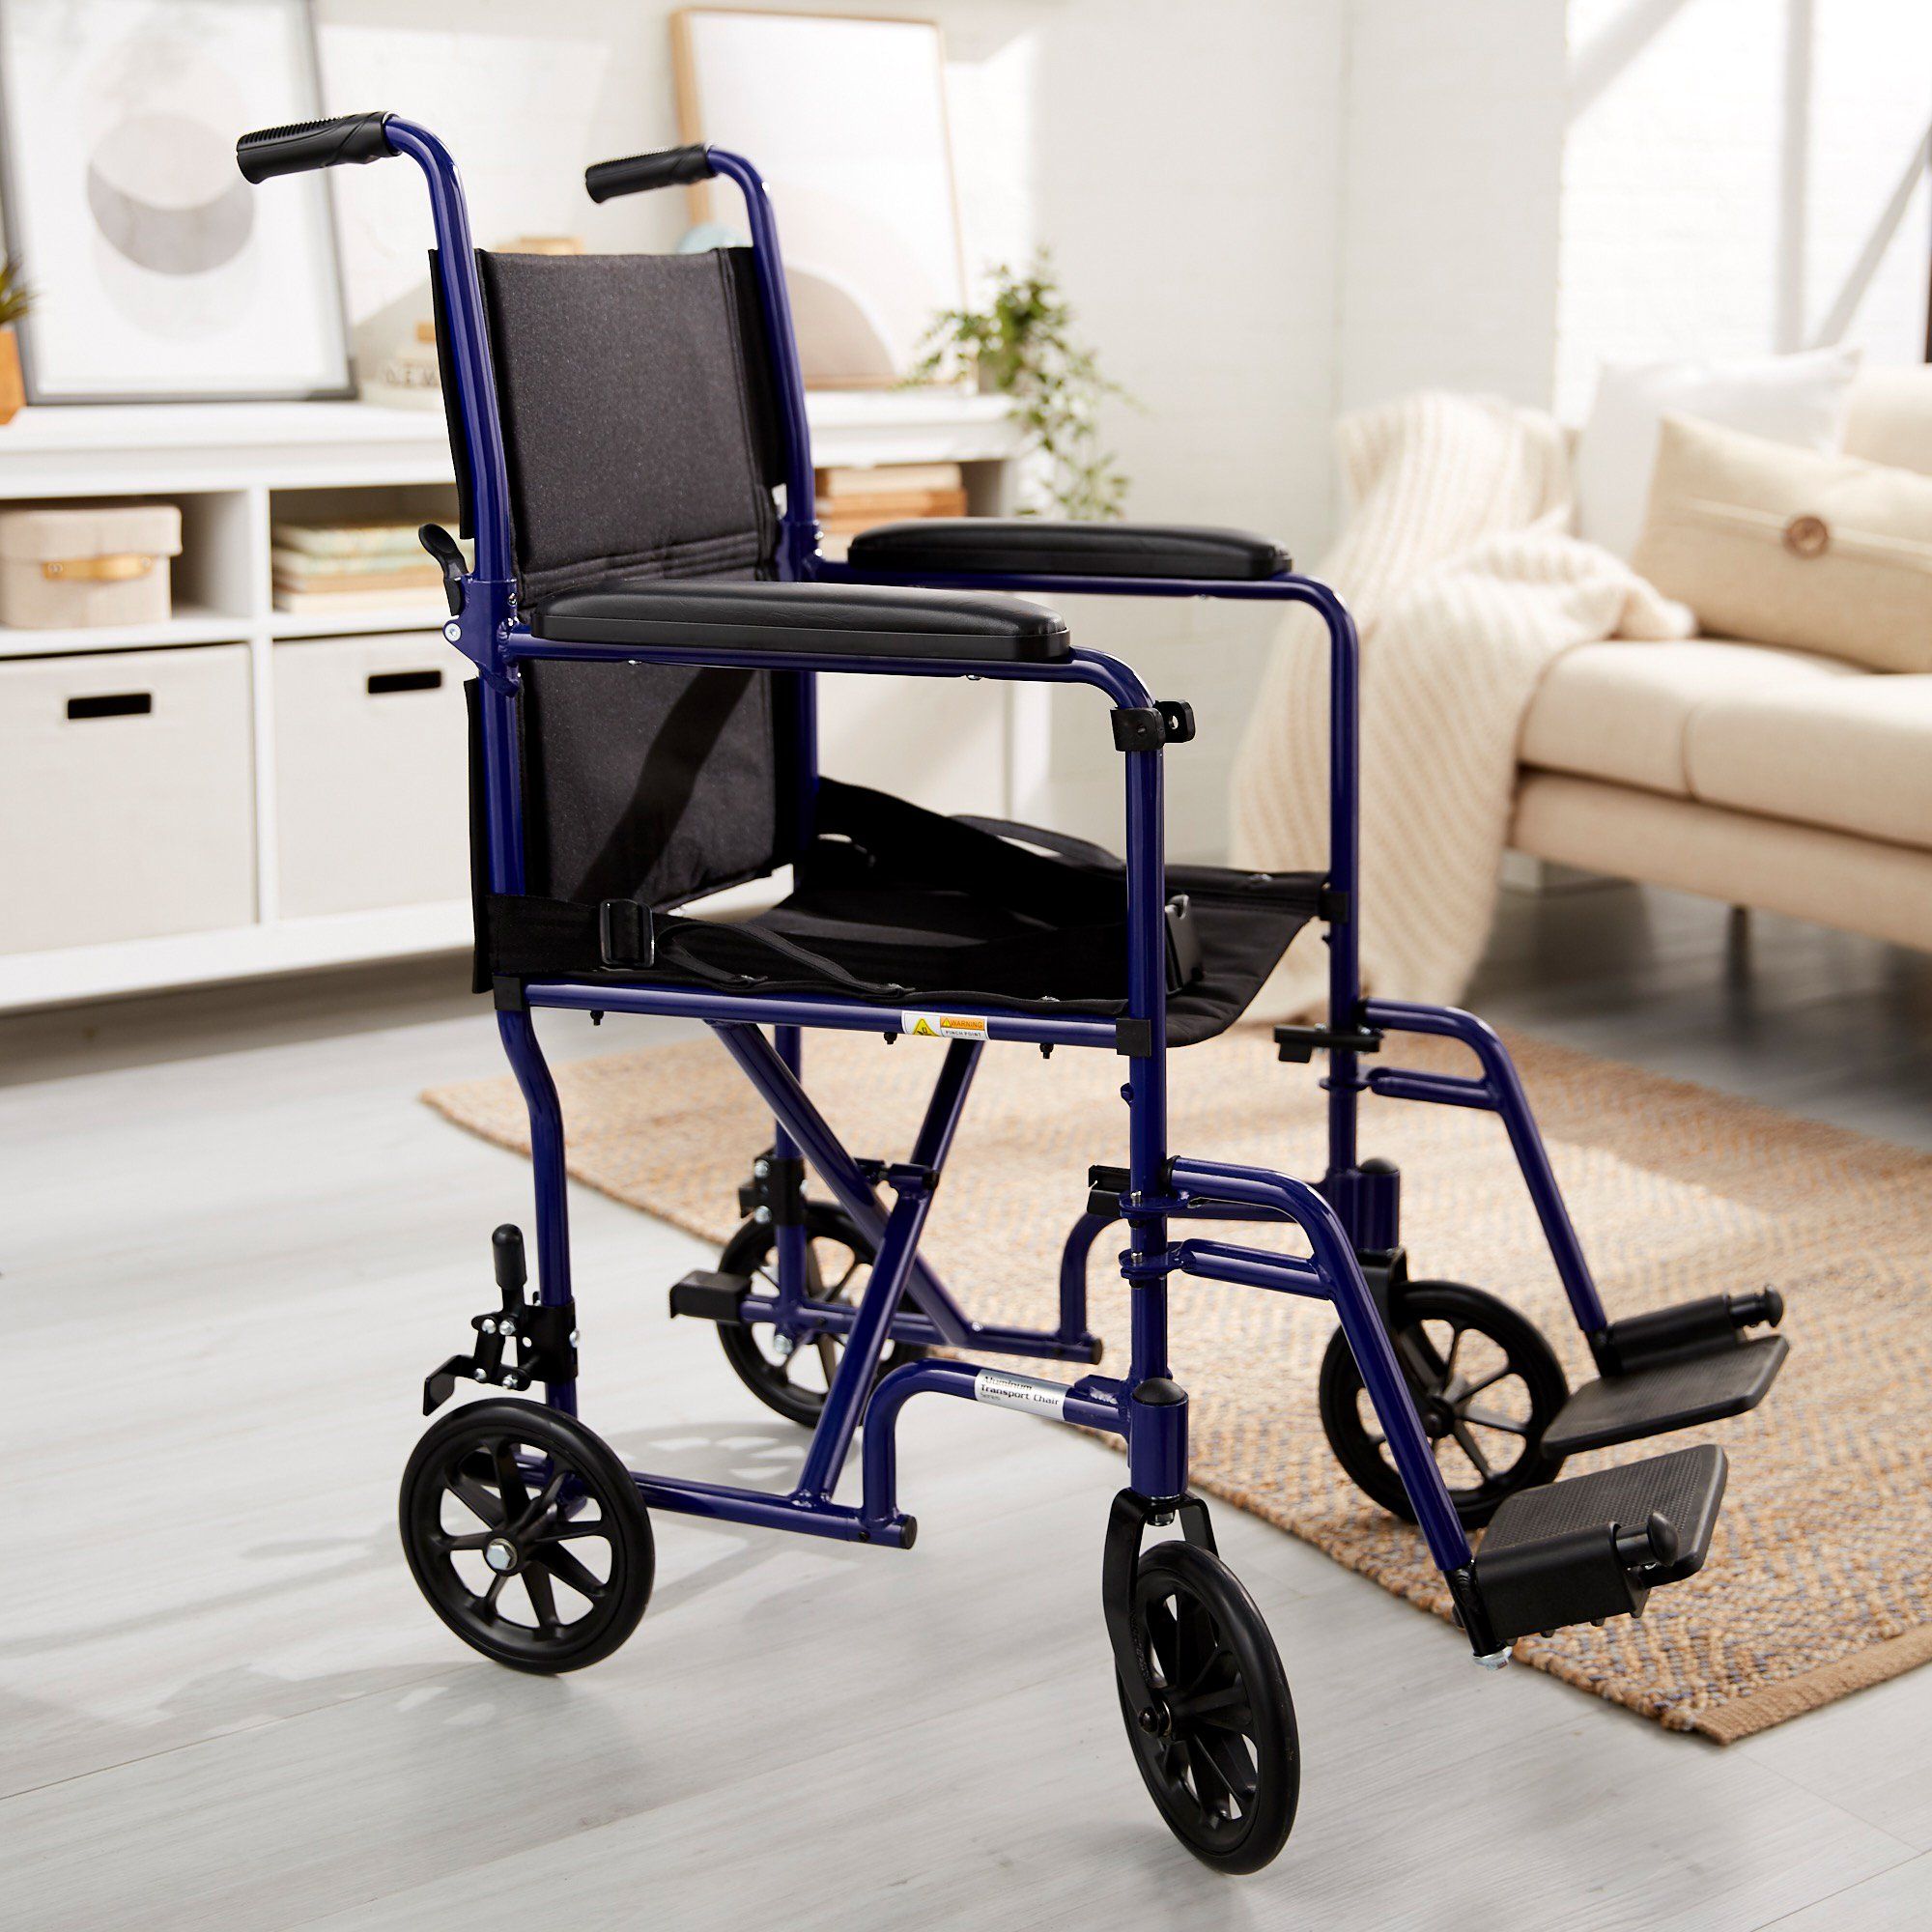 McKesson Lightweight Transport Chair, Blue - 300 lbs Capacity